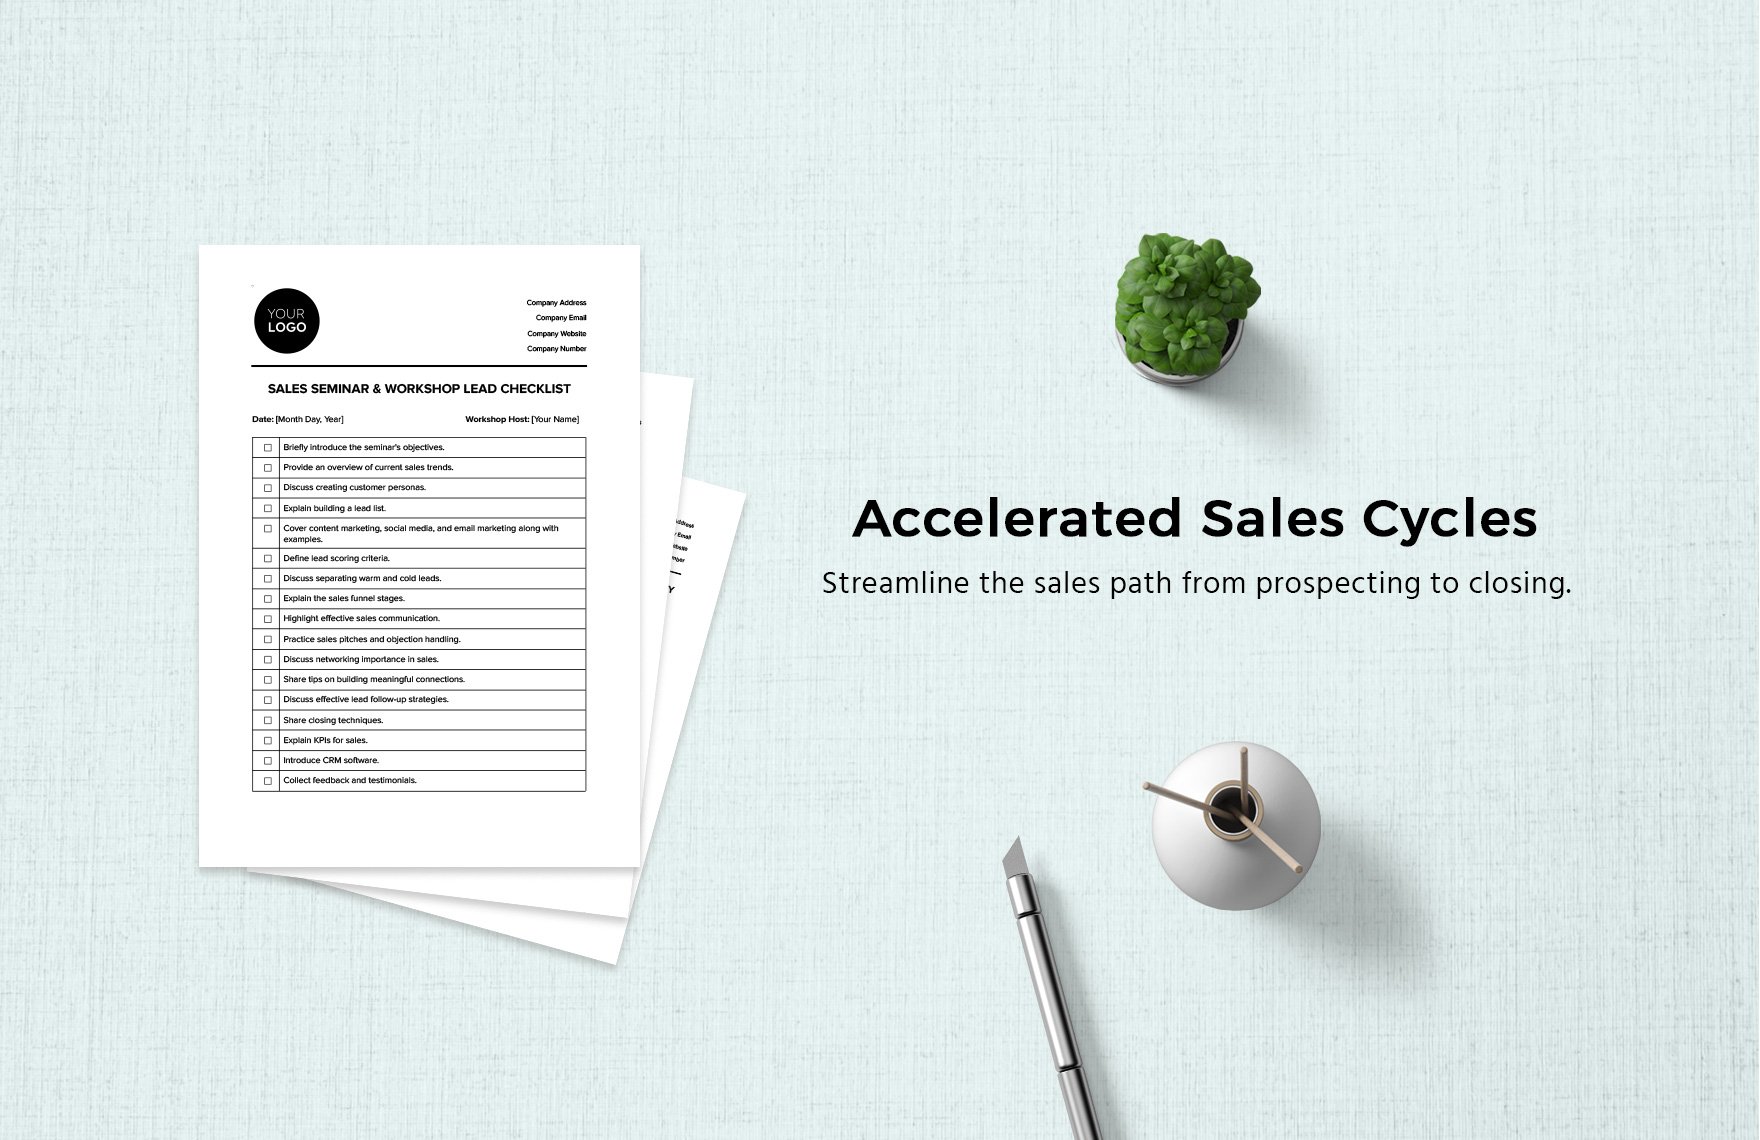 Sales Seminar & Workshop Lead Checklist Template